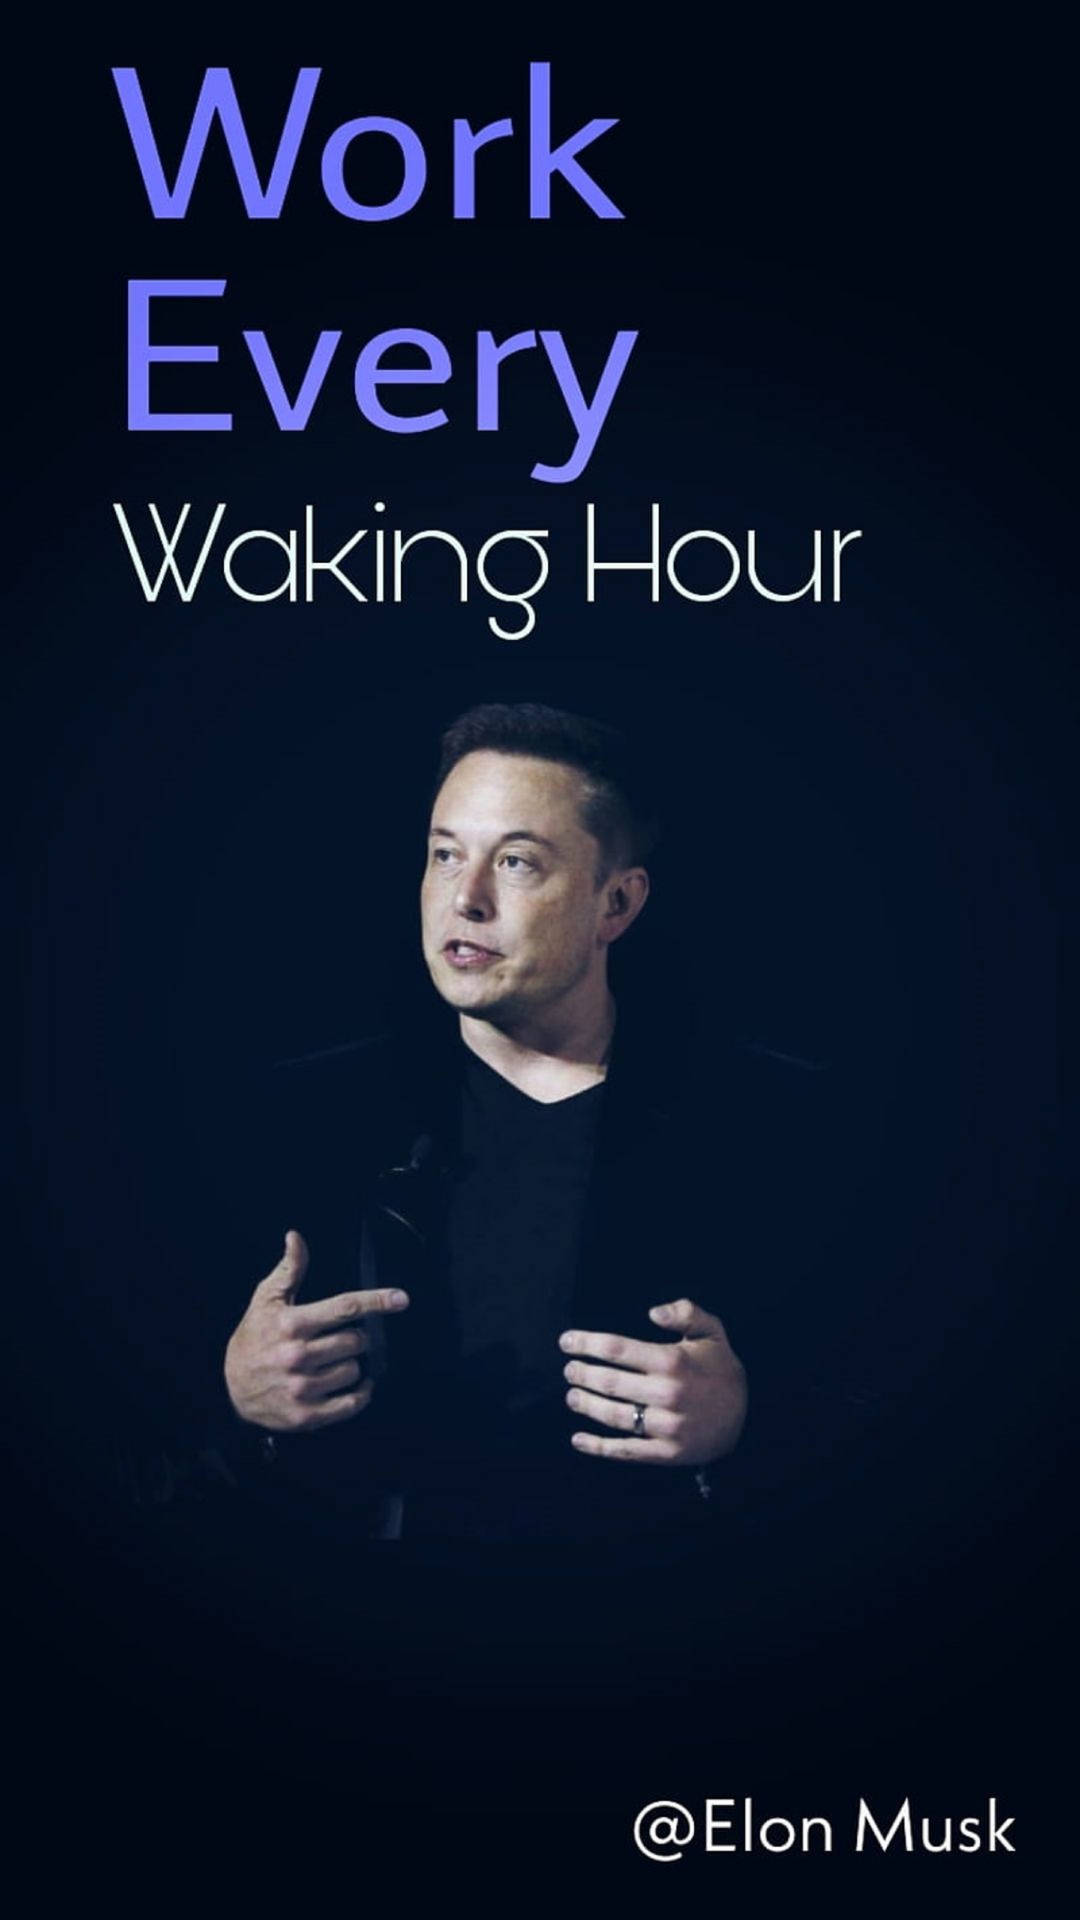 Elon Musk Work Every Waking Hour Wallpaper